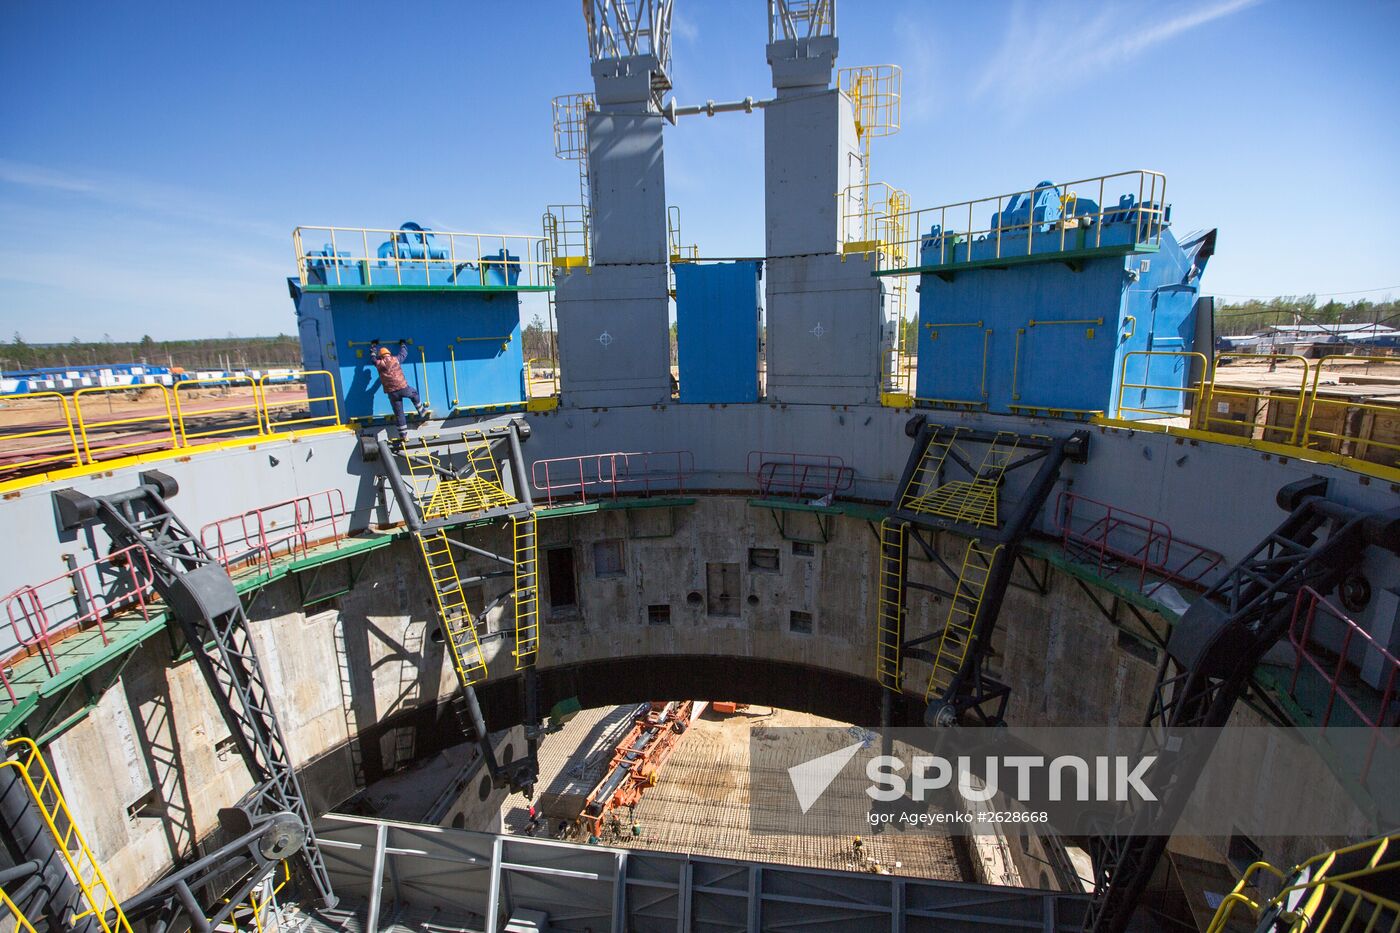 Equipment installation at Vostochny Cosmodrome in Amur Region